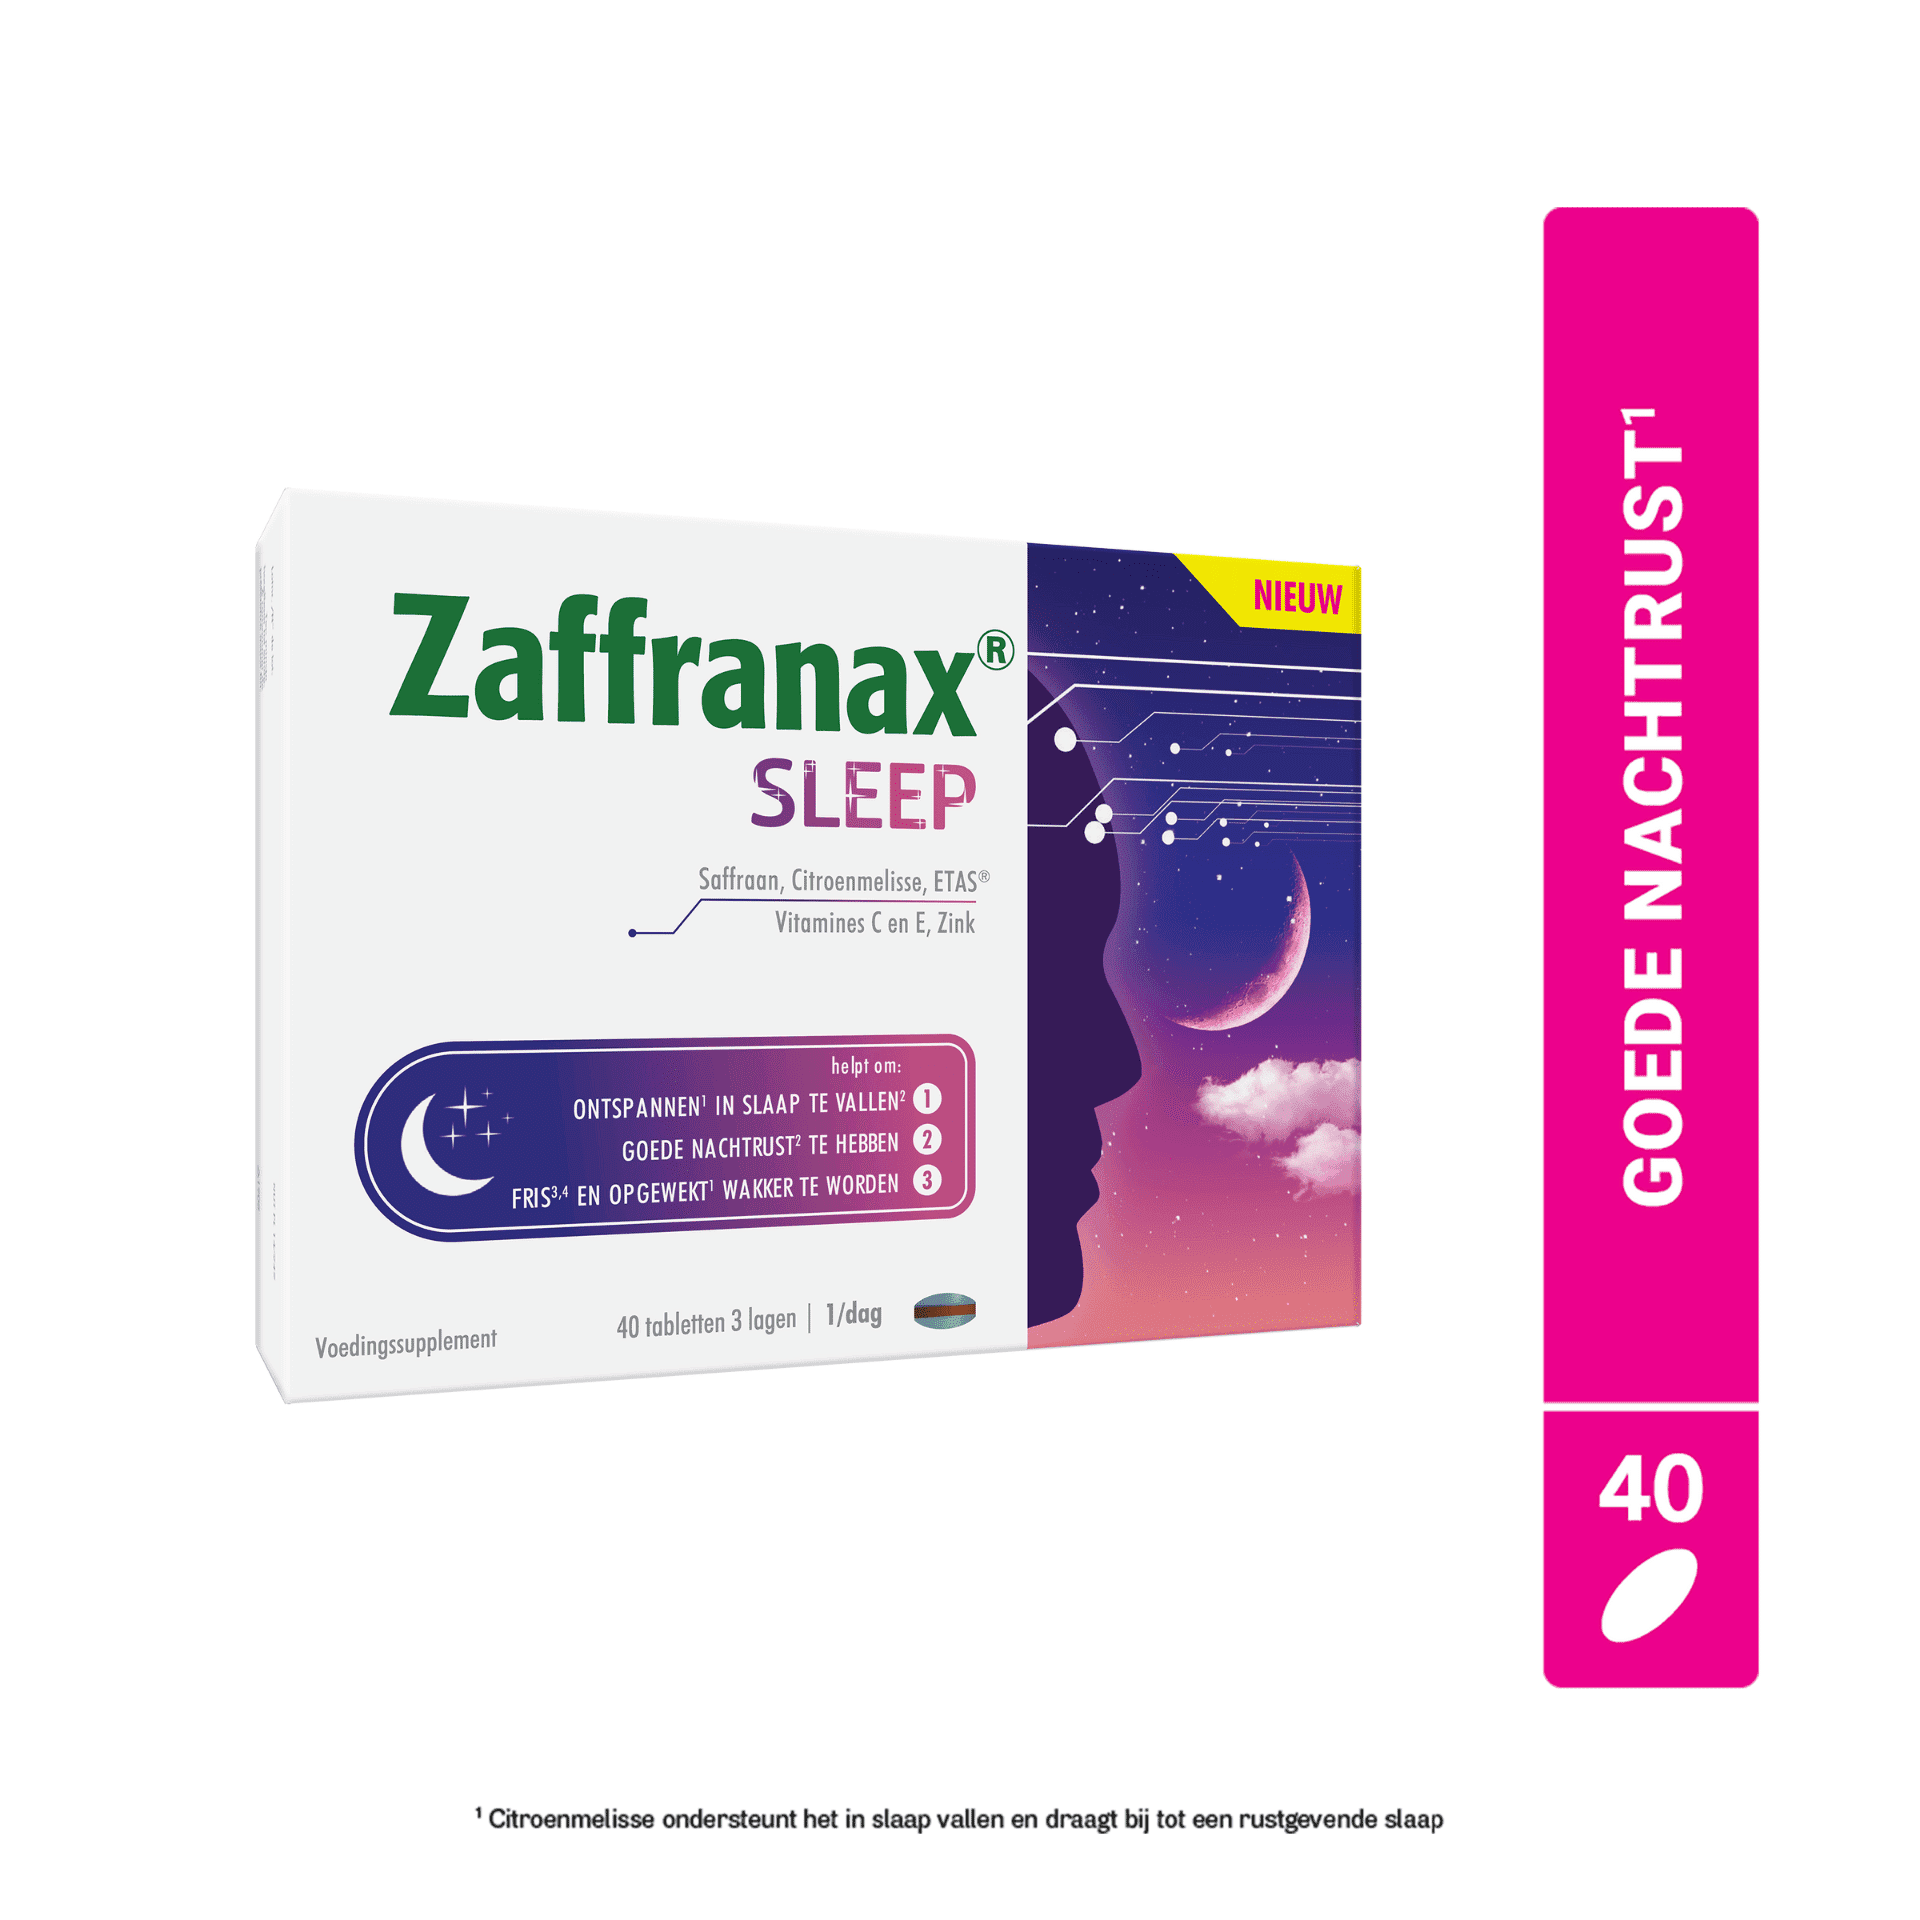 Zaffranax Sleep - Slaap, vermoeidheid, stressmomenten